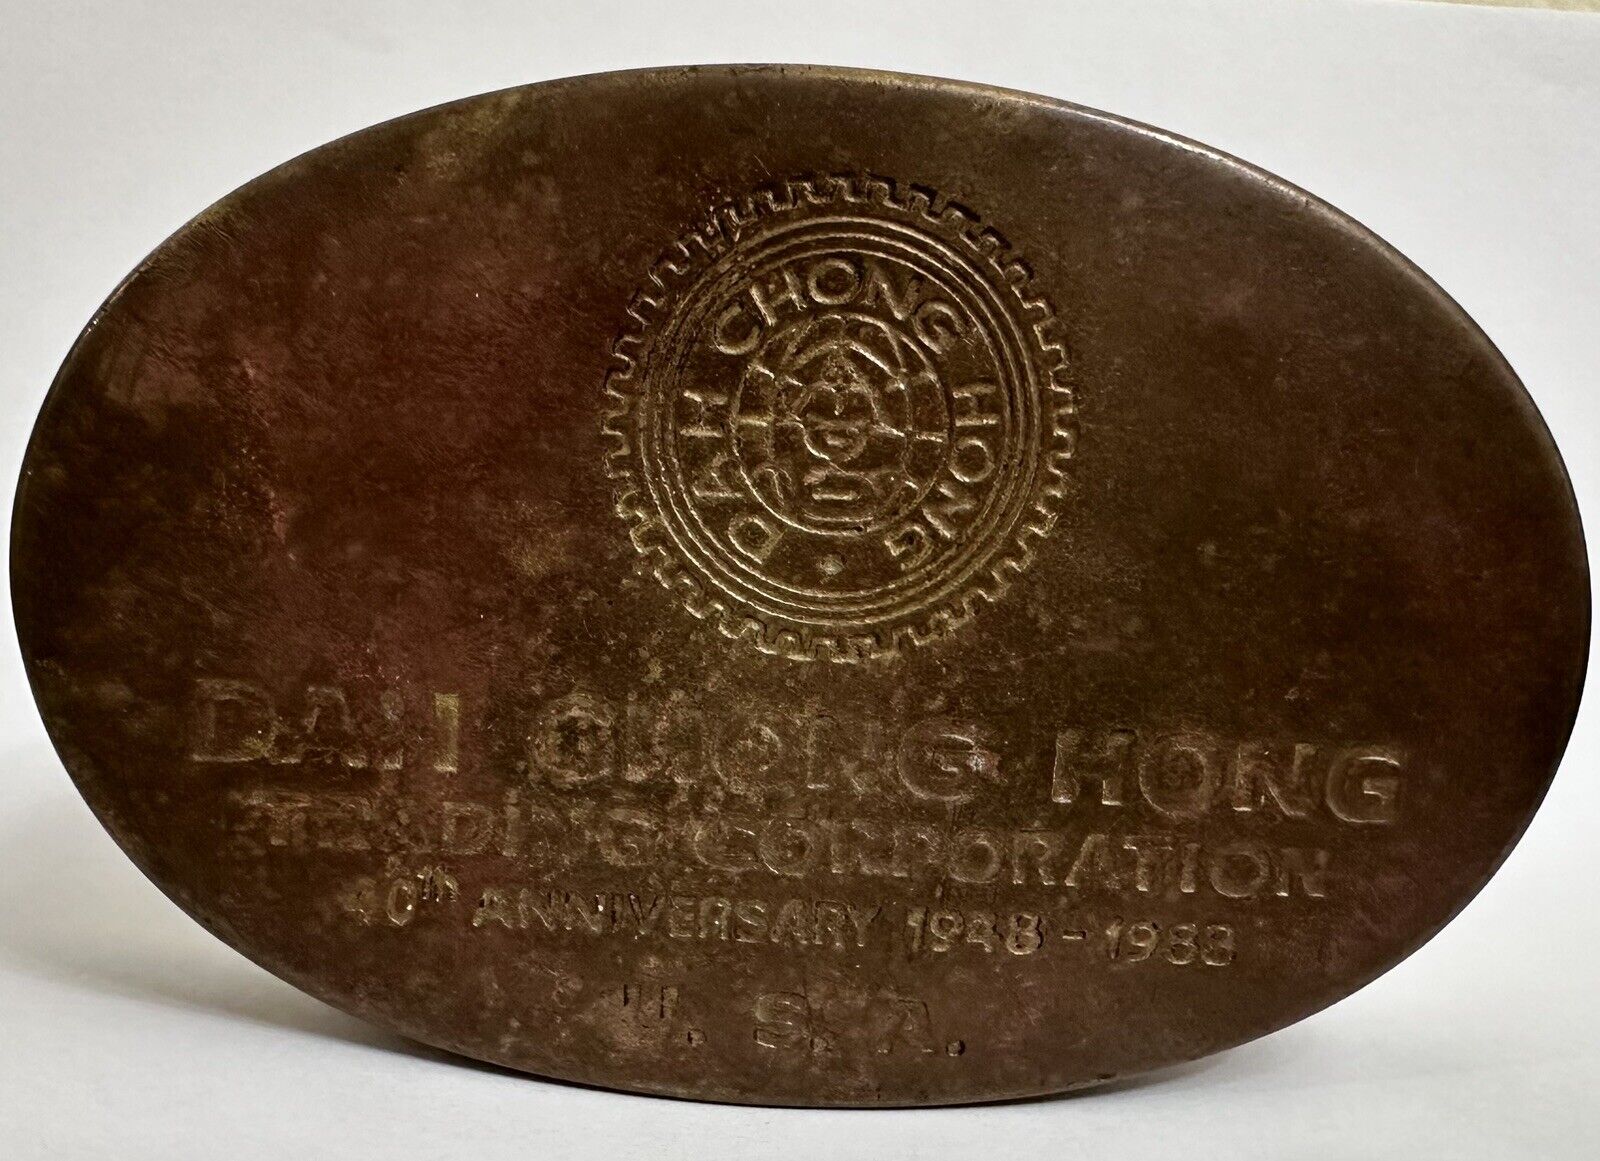 Mottahedeh Copper Snuff Box 1948-1988 Dah Chong Hong Trading Corp USA 40th Anniv